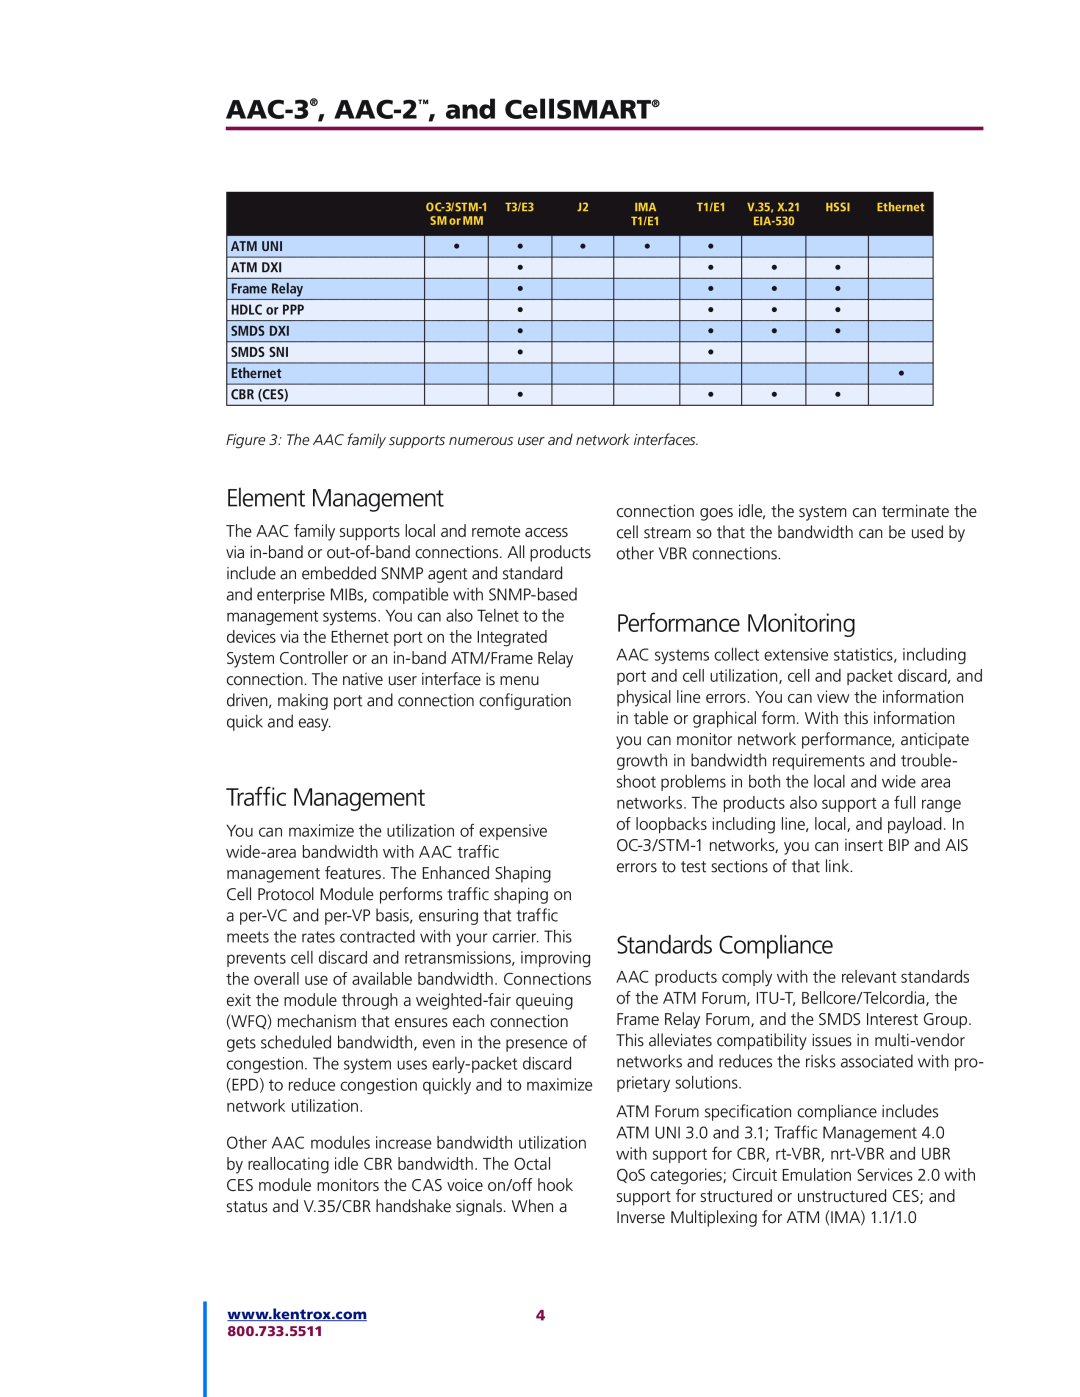 Kentrox CELLSMART, AAC-3, AAC-2TM manual Element Management, Trafﬁc Management, Performance Monitoring, Standards Compliance 